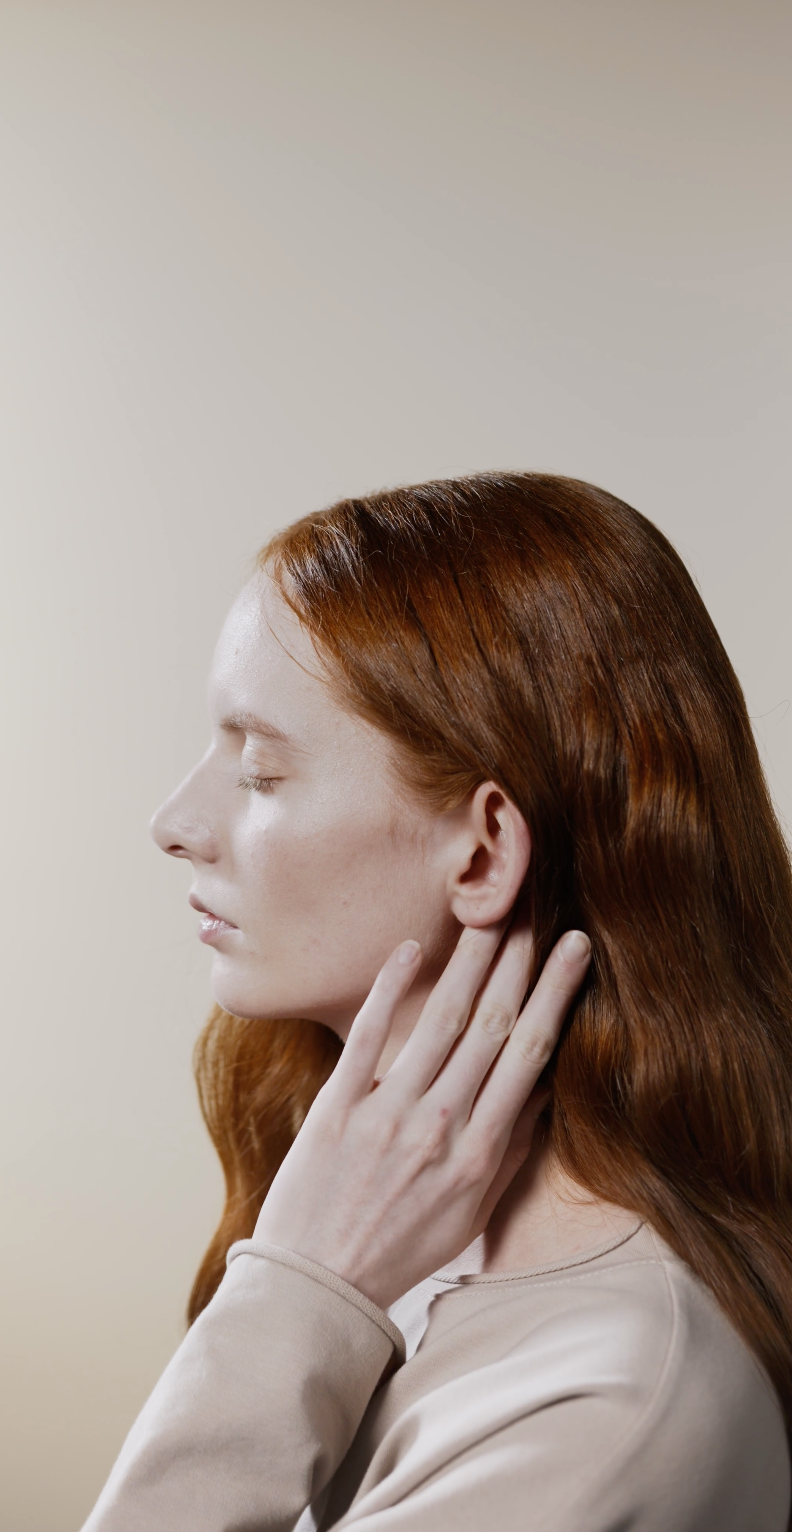 Scalp Acne: Causes, Symptoms & Treatment